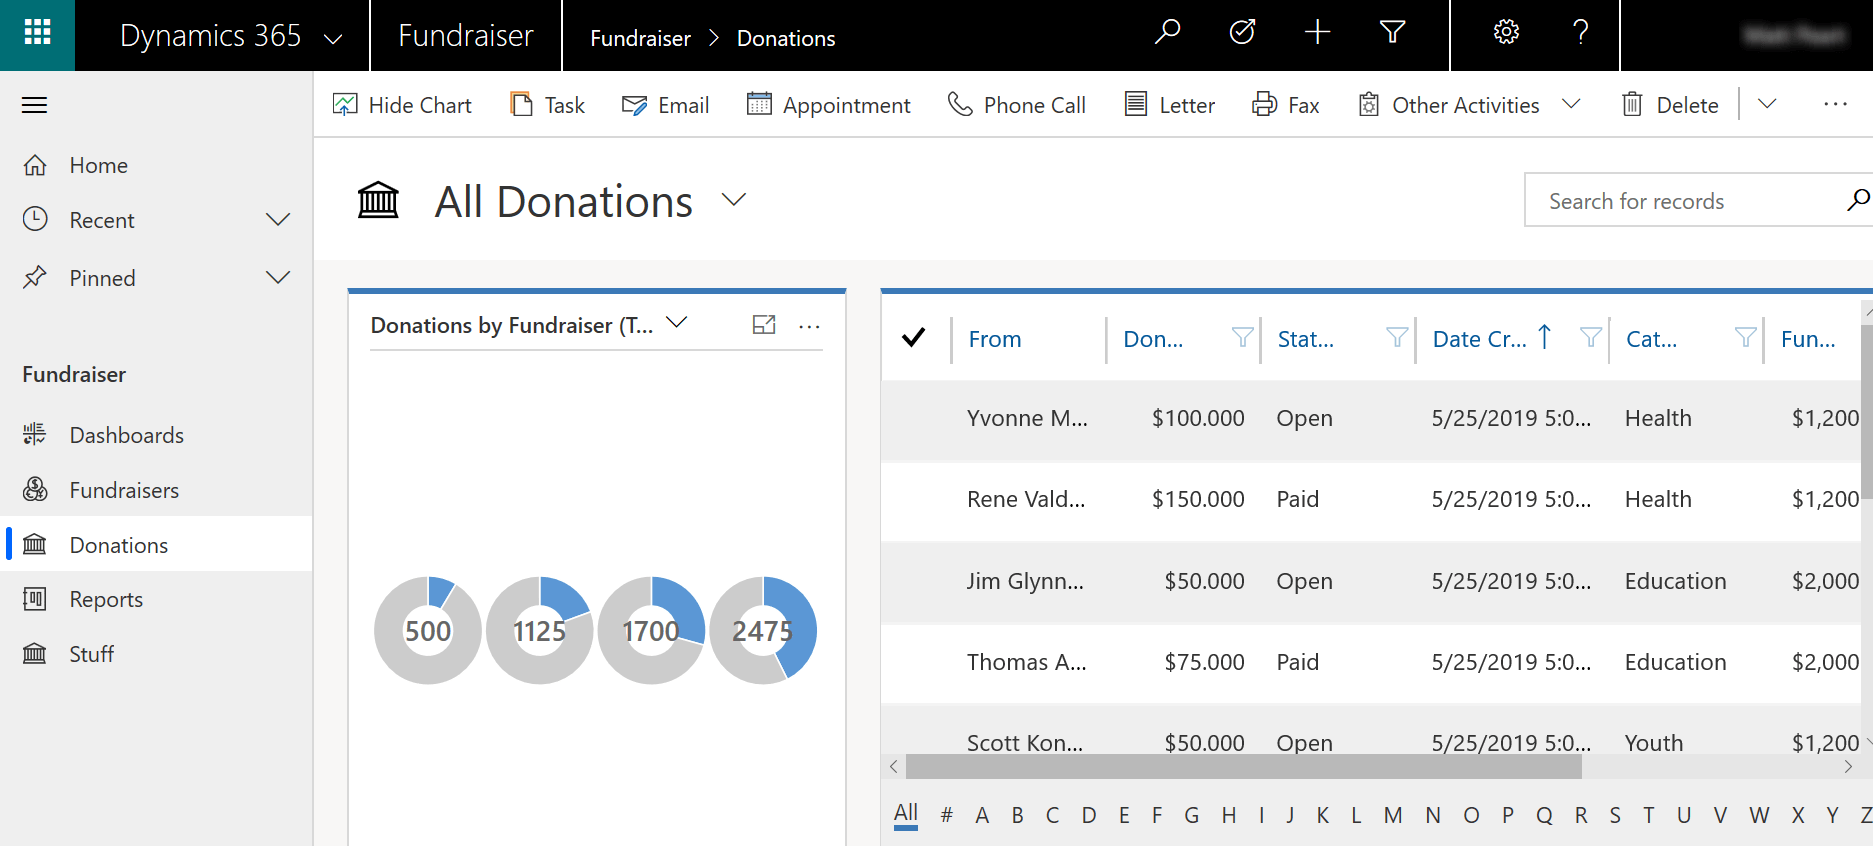 Microsoft Dynamics: Fundraiser donations